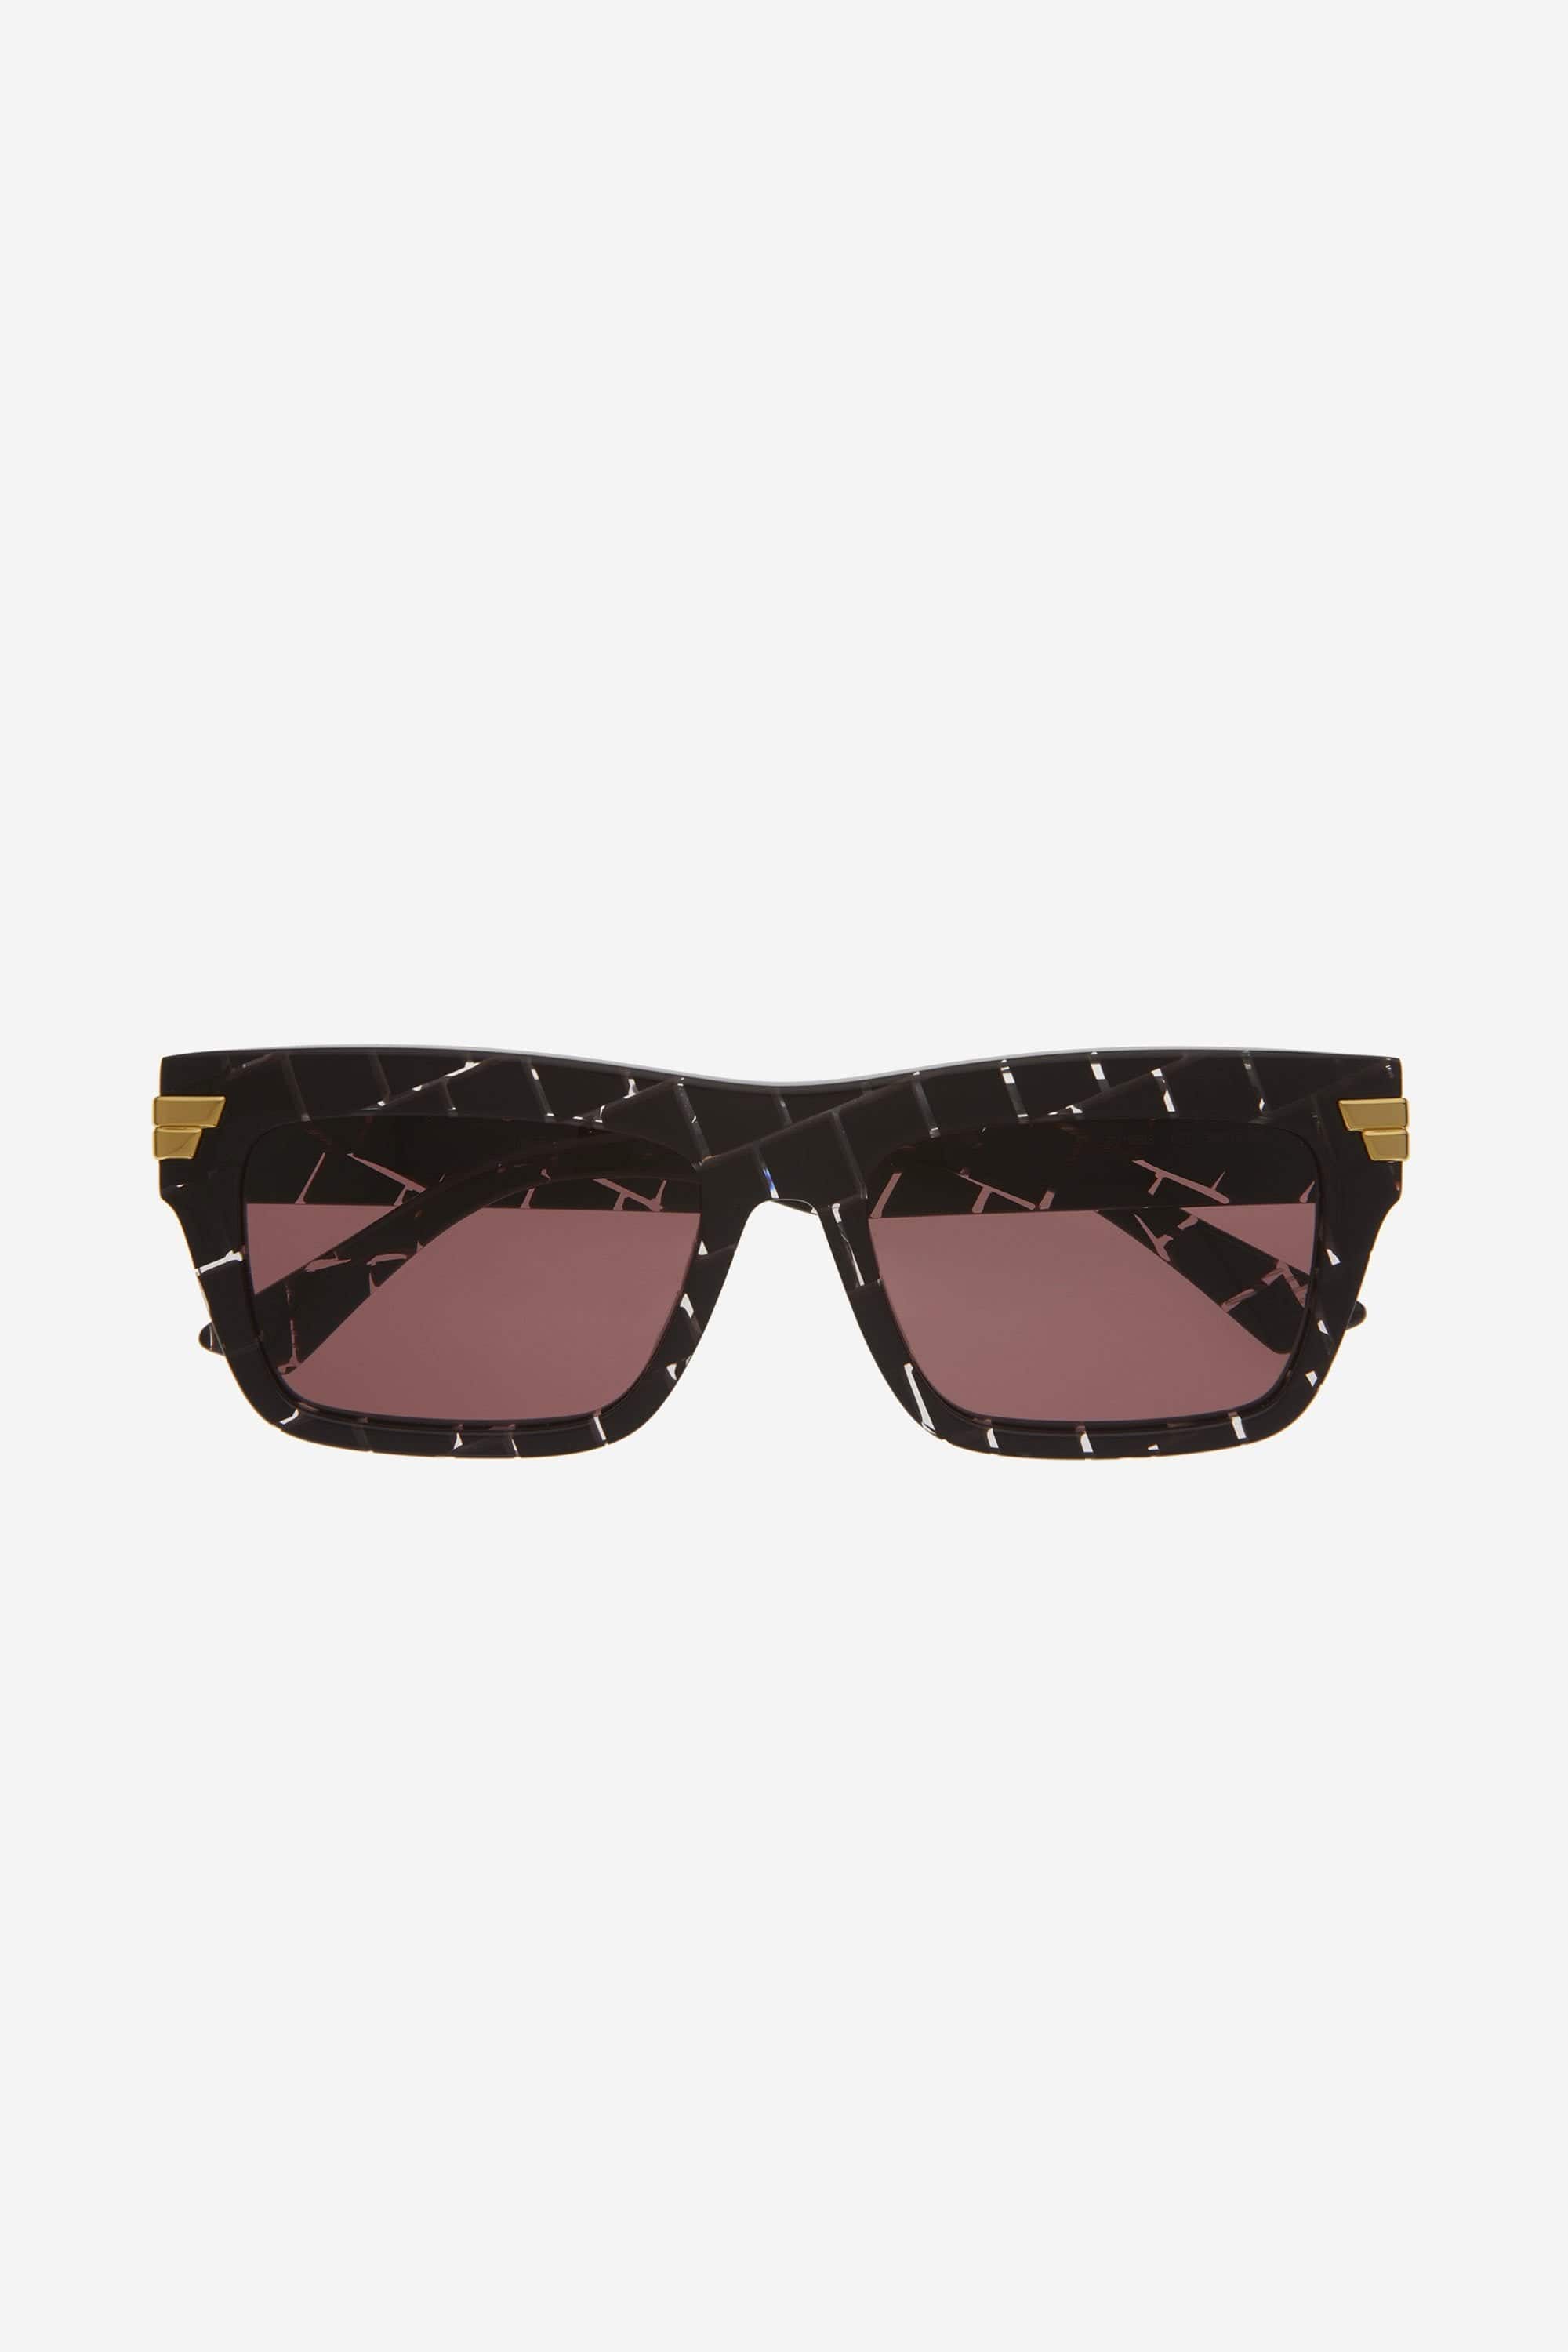 Bottega Veneta UNISEX squared bold burgundy intrecciato sunglasses - Eyewear Club